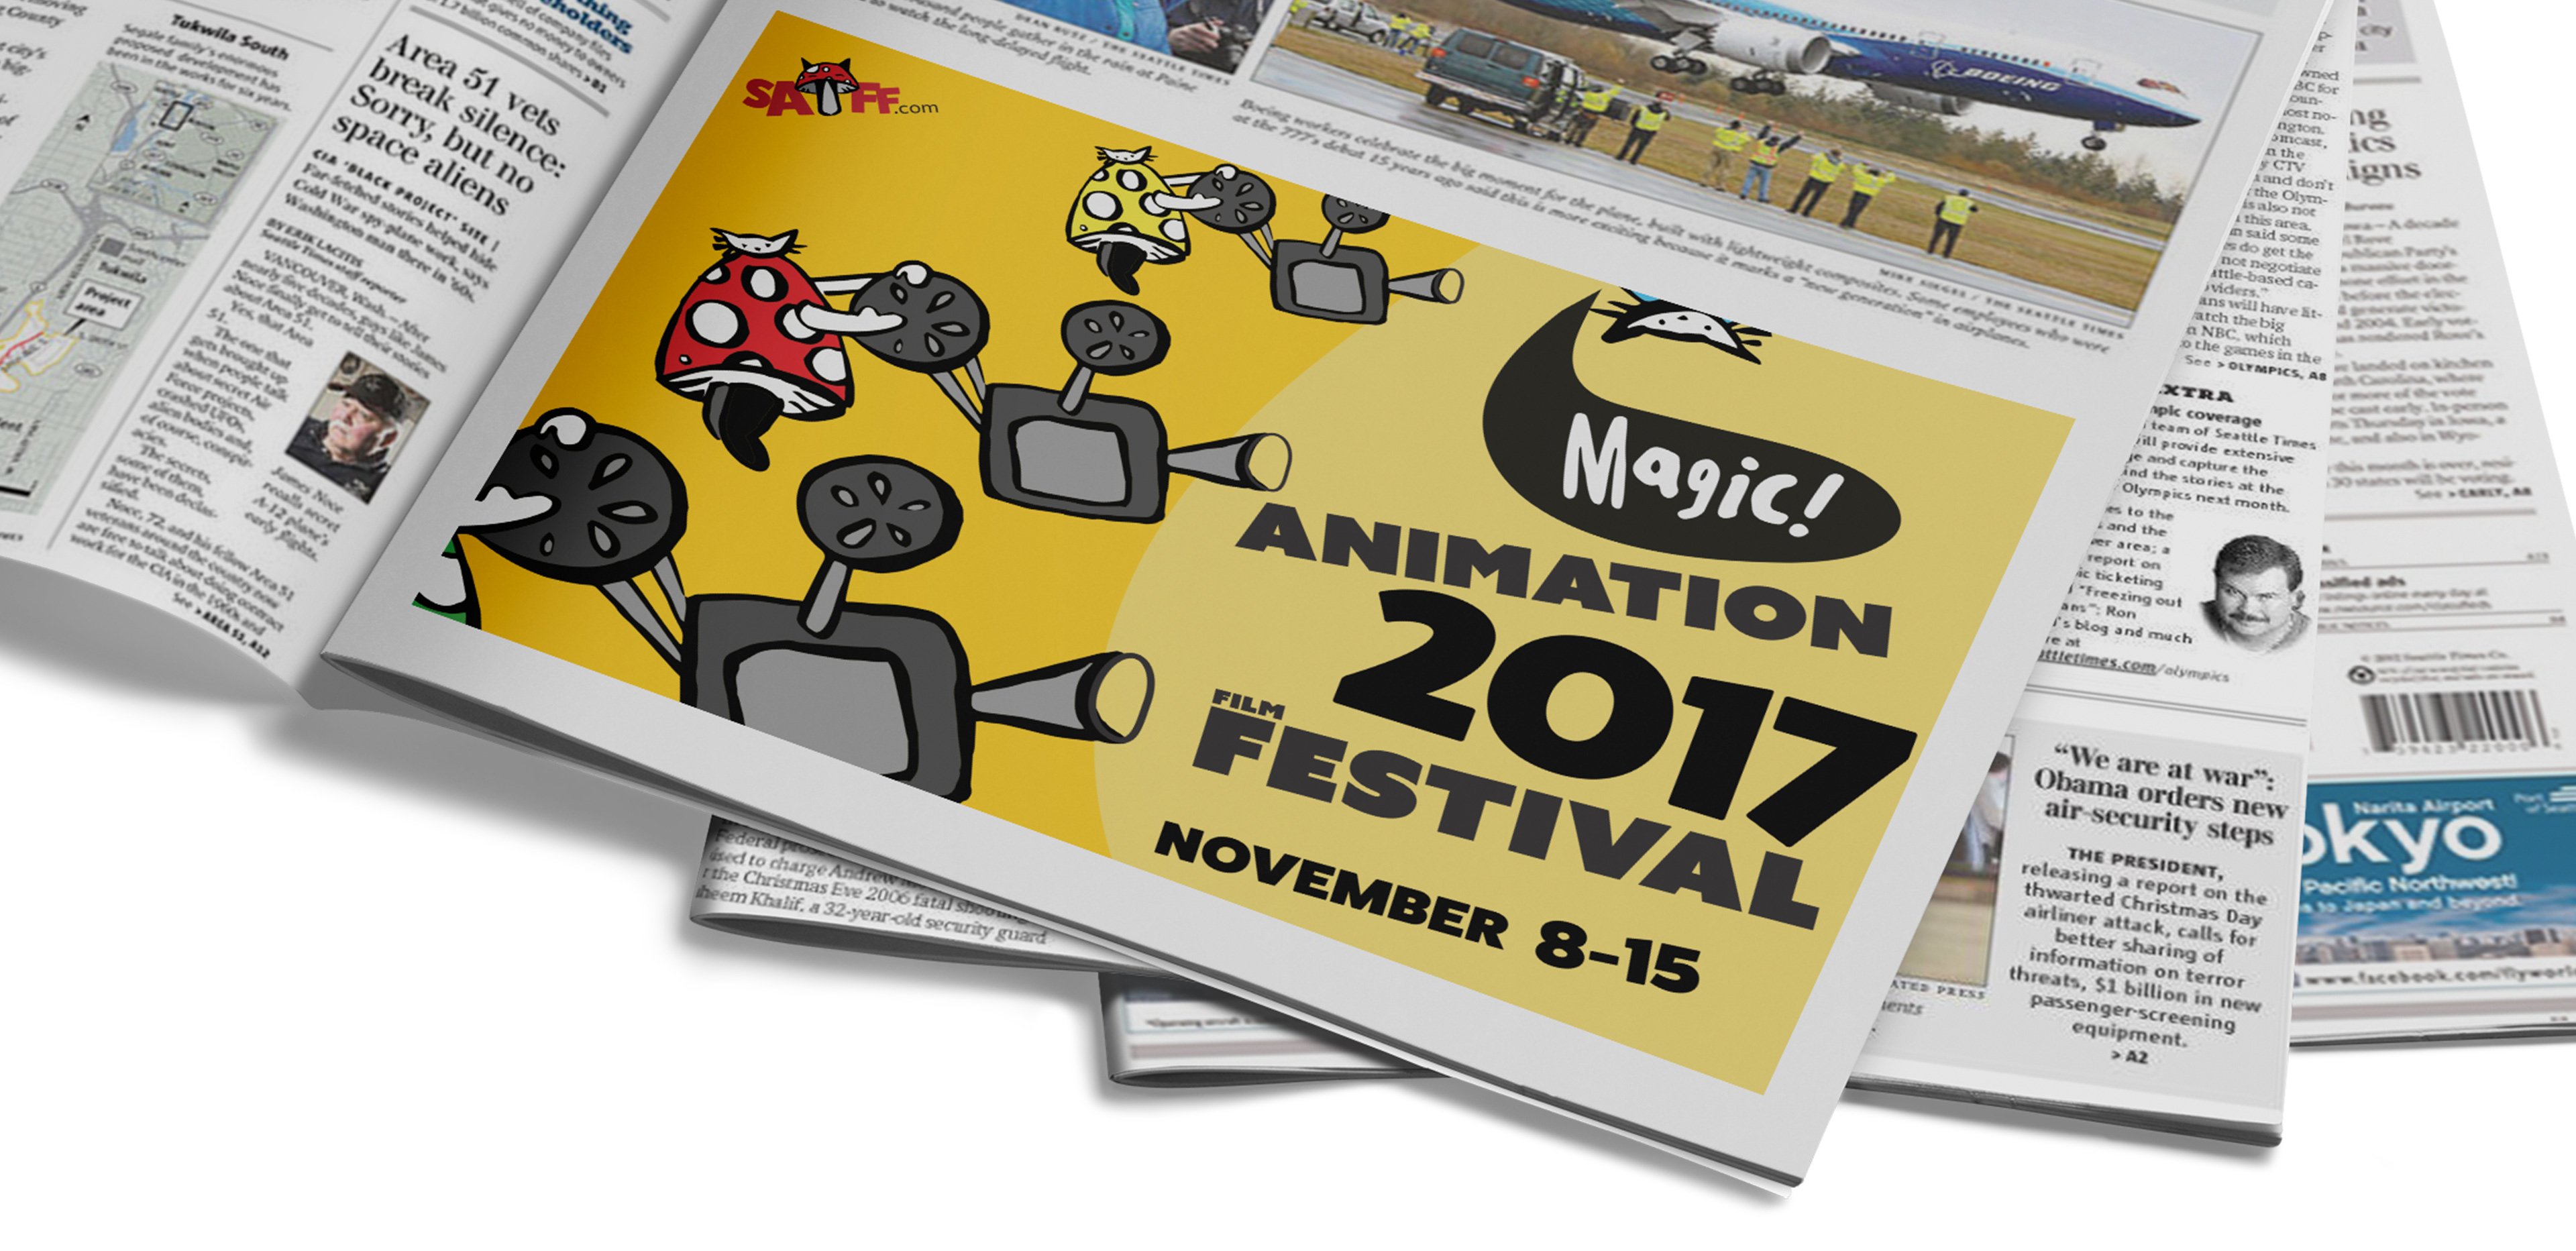 Seattle Animation Film Festival by Ambar de Kok-Mercado